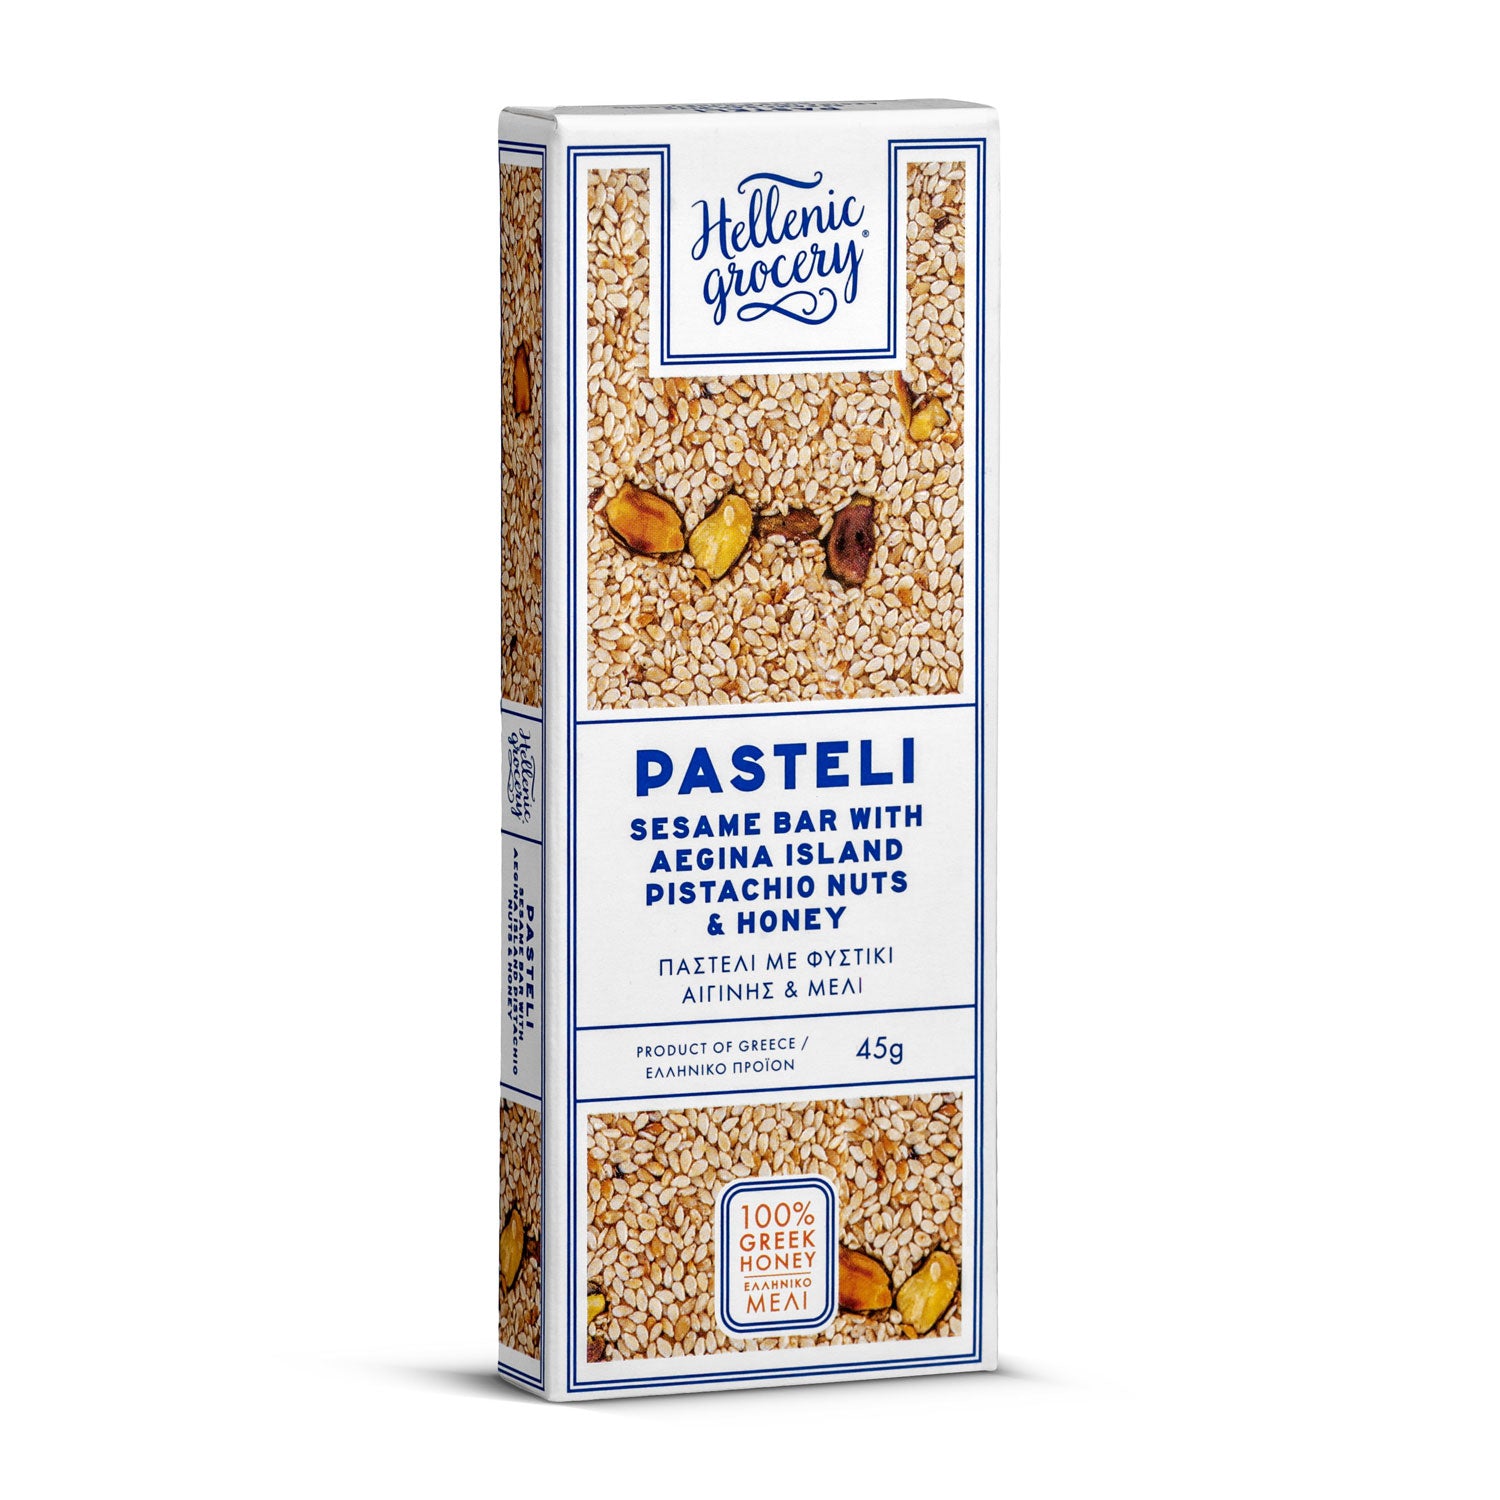 Pasteli with Pistachio and Honey - 45g - Hellenic Grocery